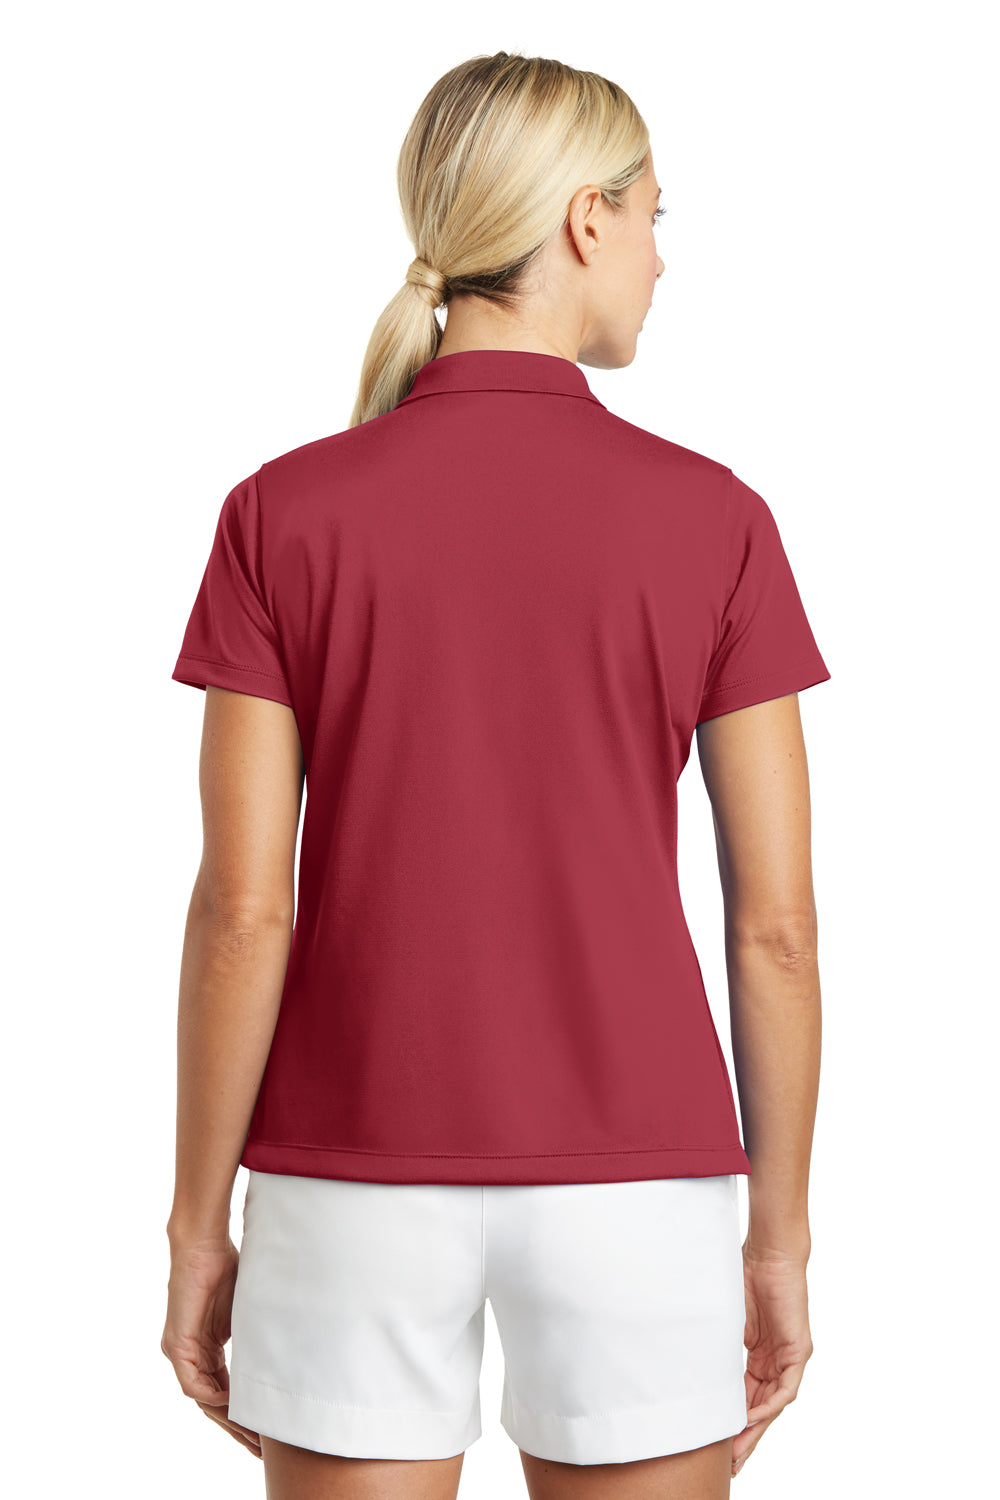 Nike 203697 Womens Tech Basic Dri-Fit Moisture Wicking Short Sleeve Polo Shirt Pro Red Model Back